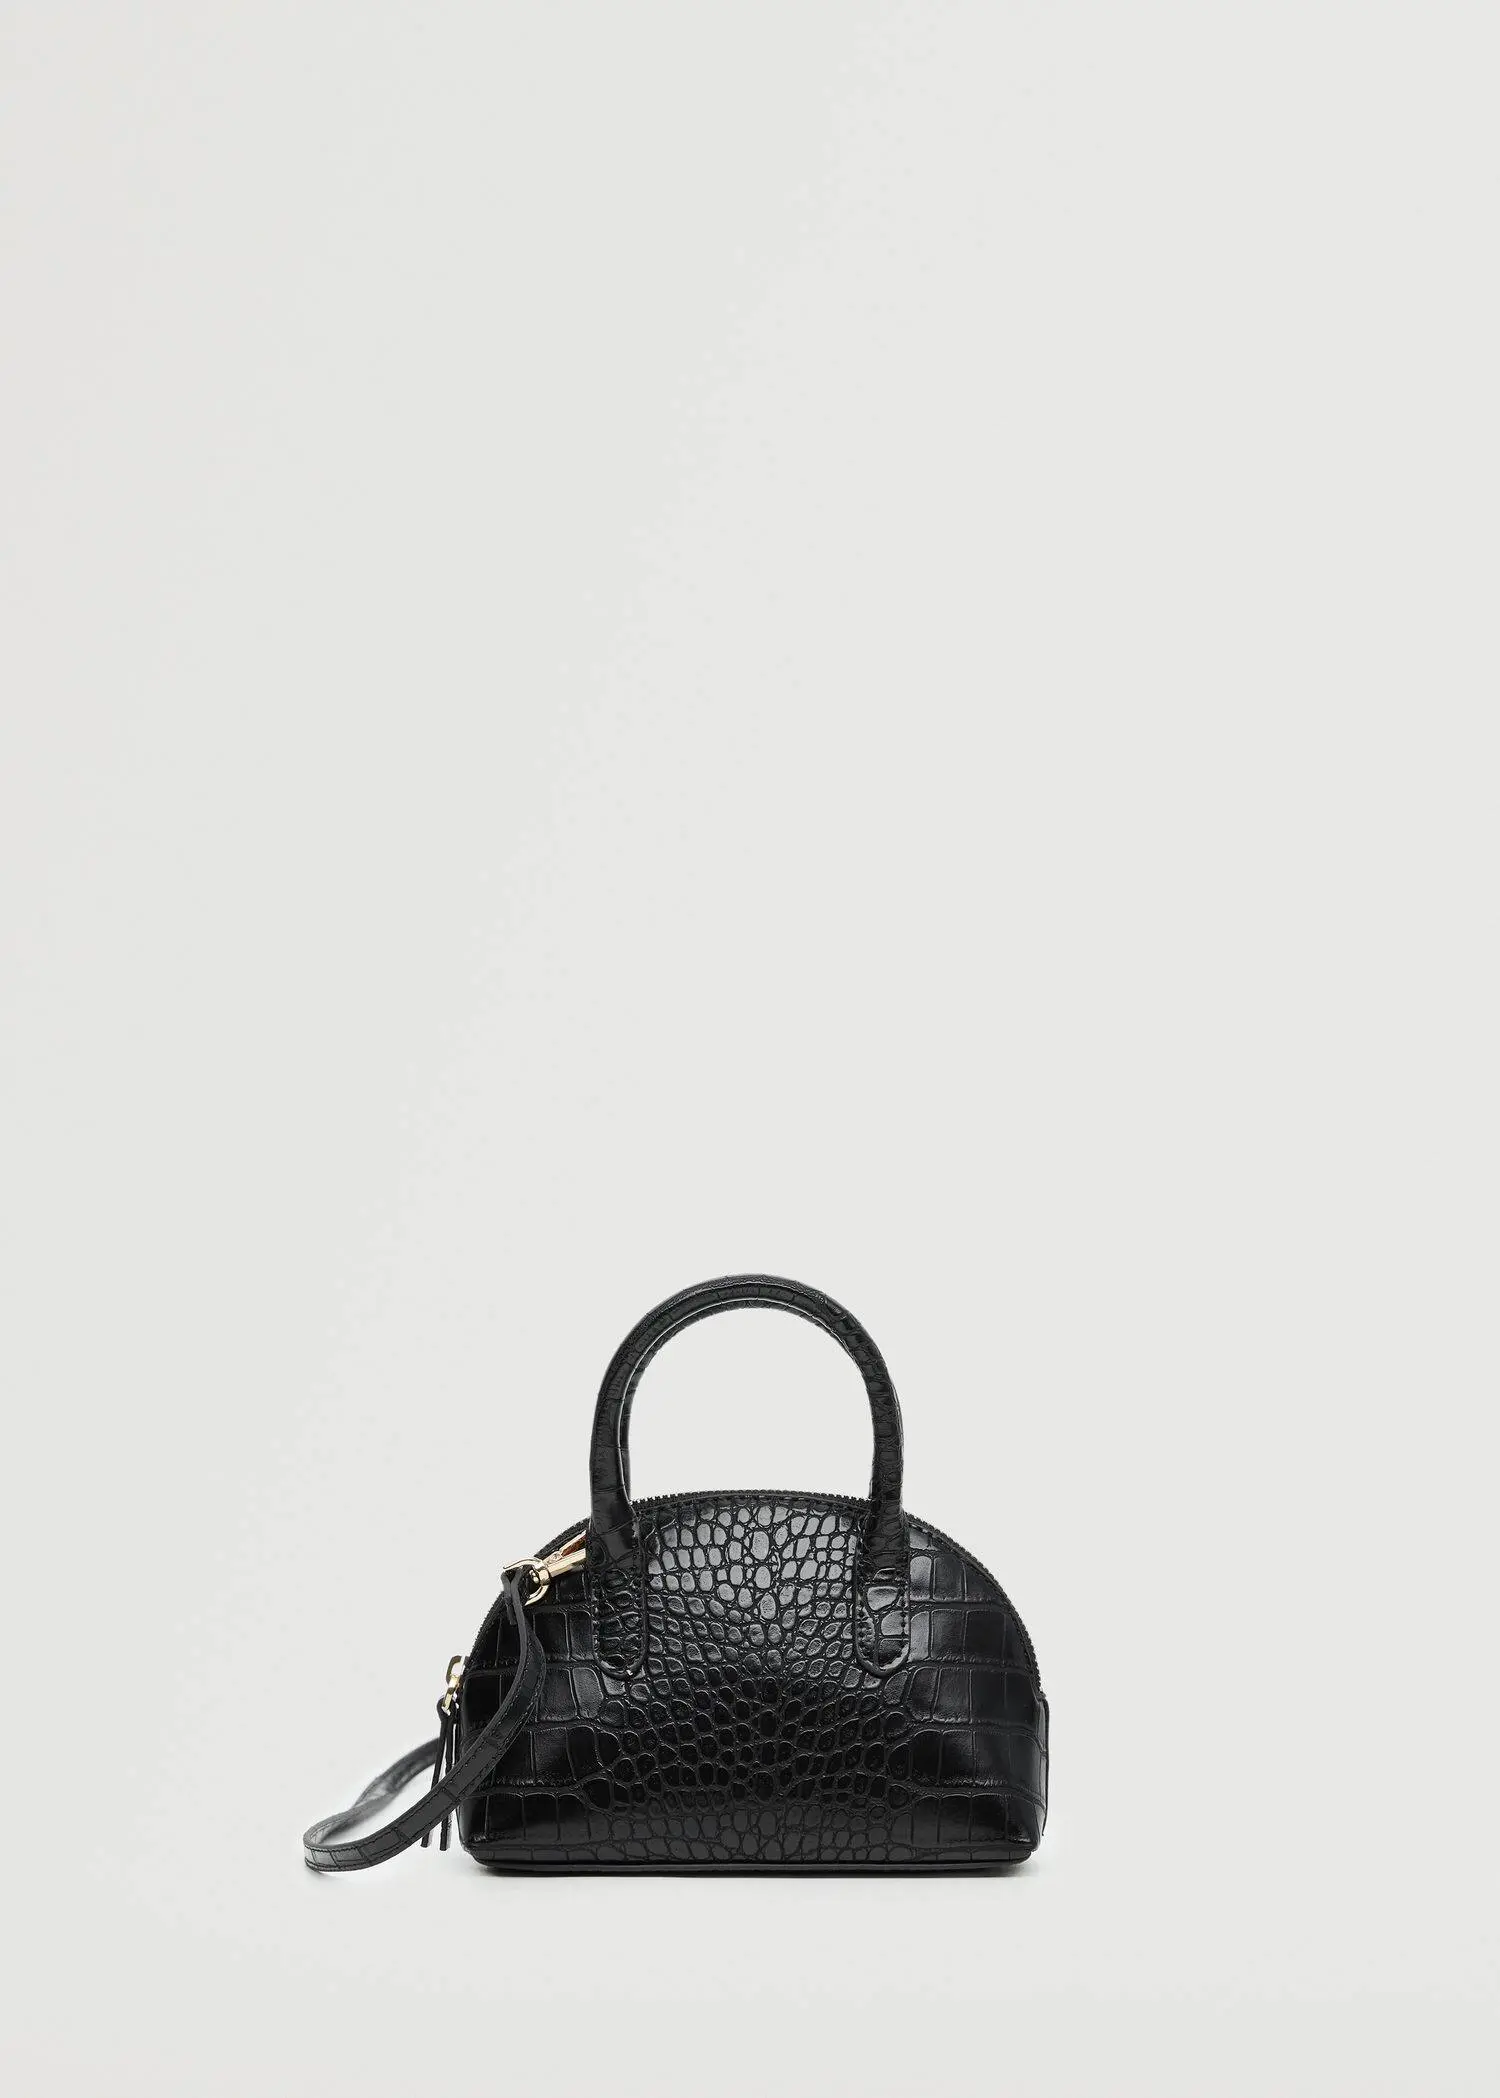 Mango Crossbody mini bag. a black purse is shown against a white background. 